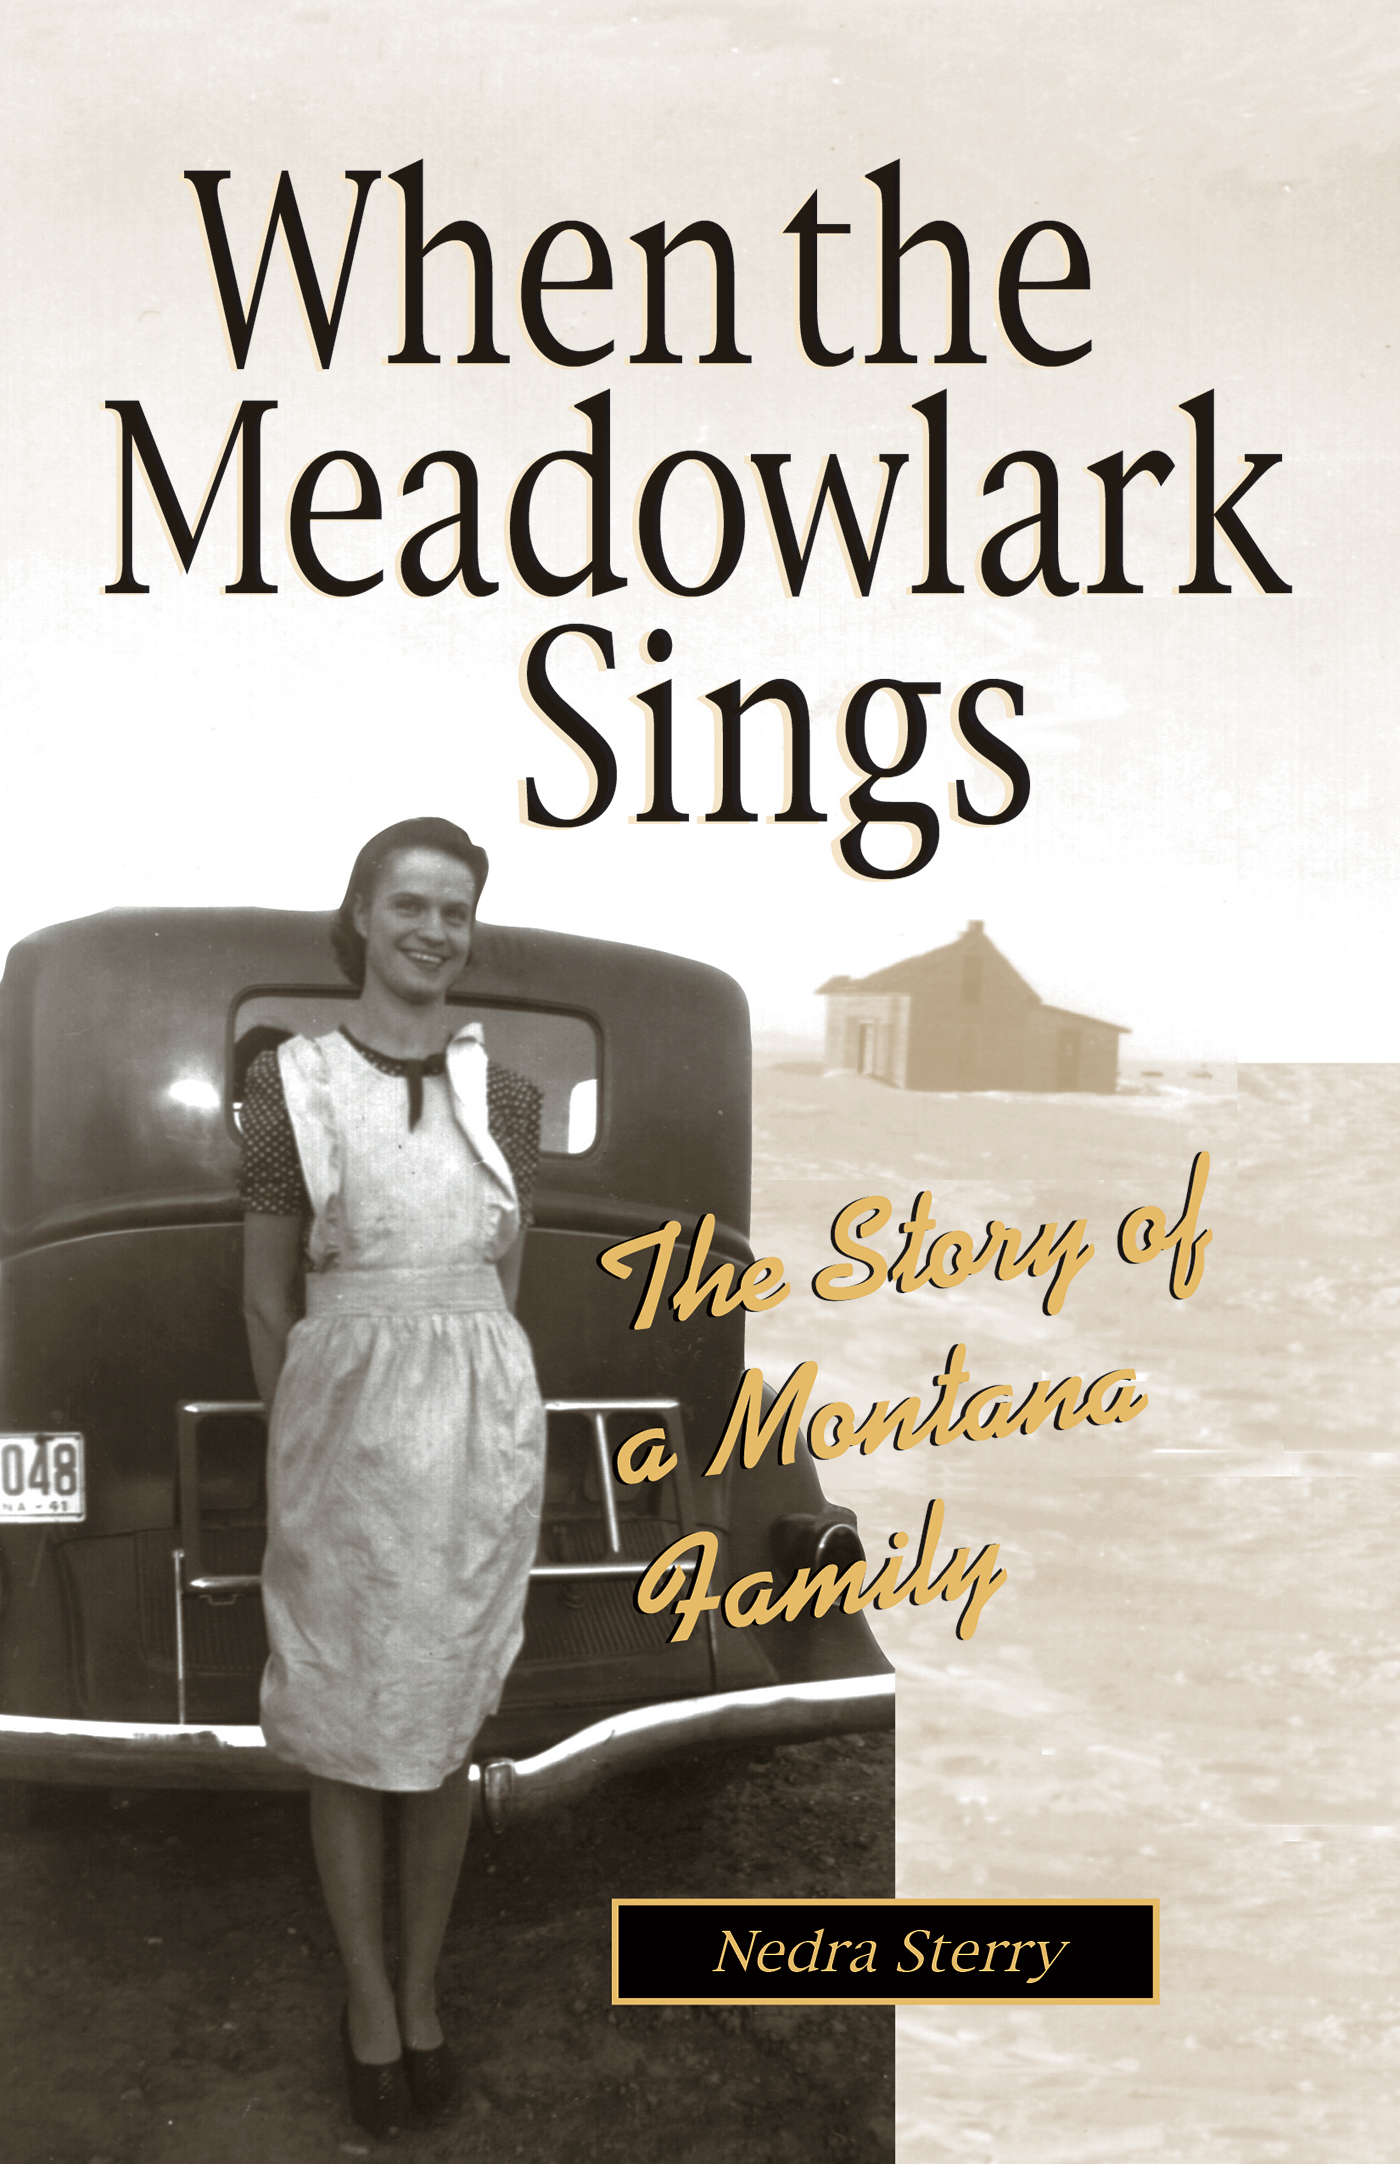 When the Meadowlark Sings A Montana Memoir